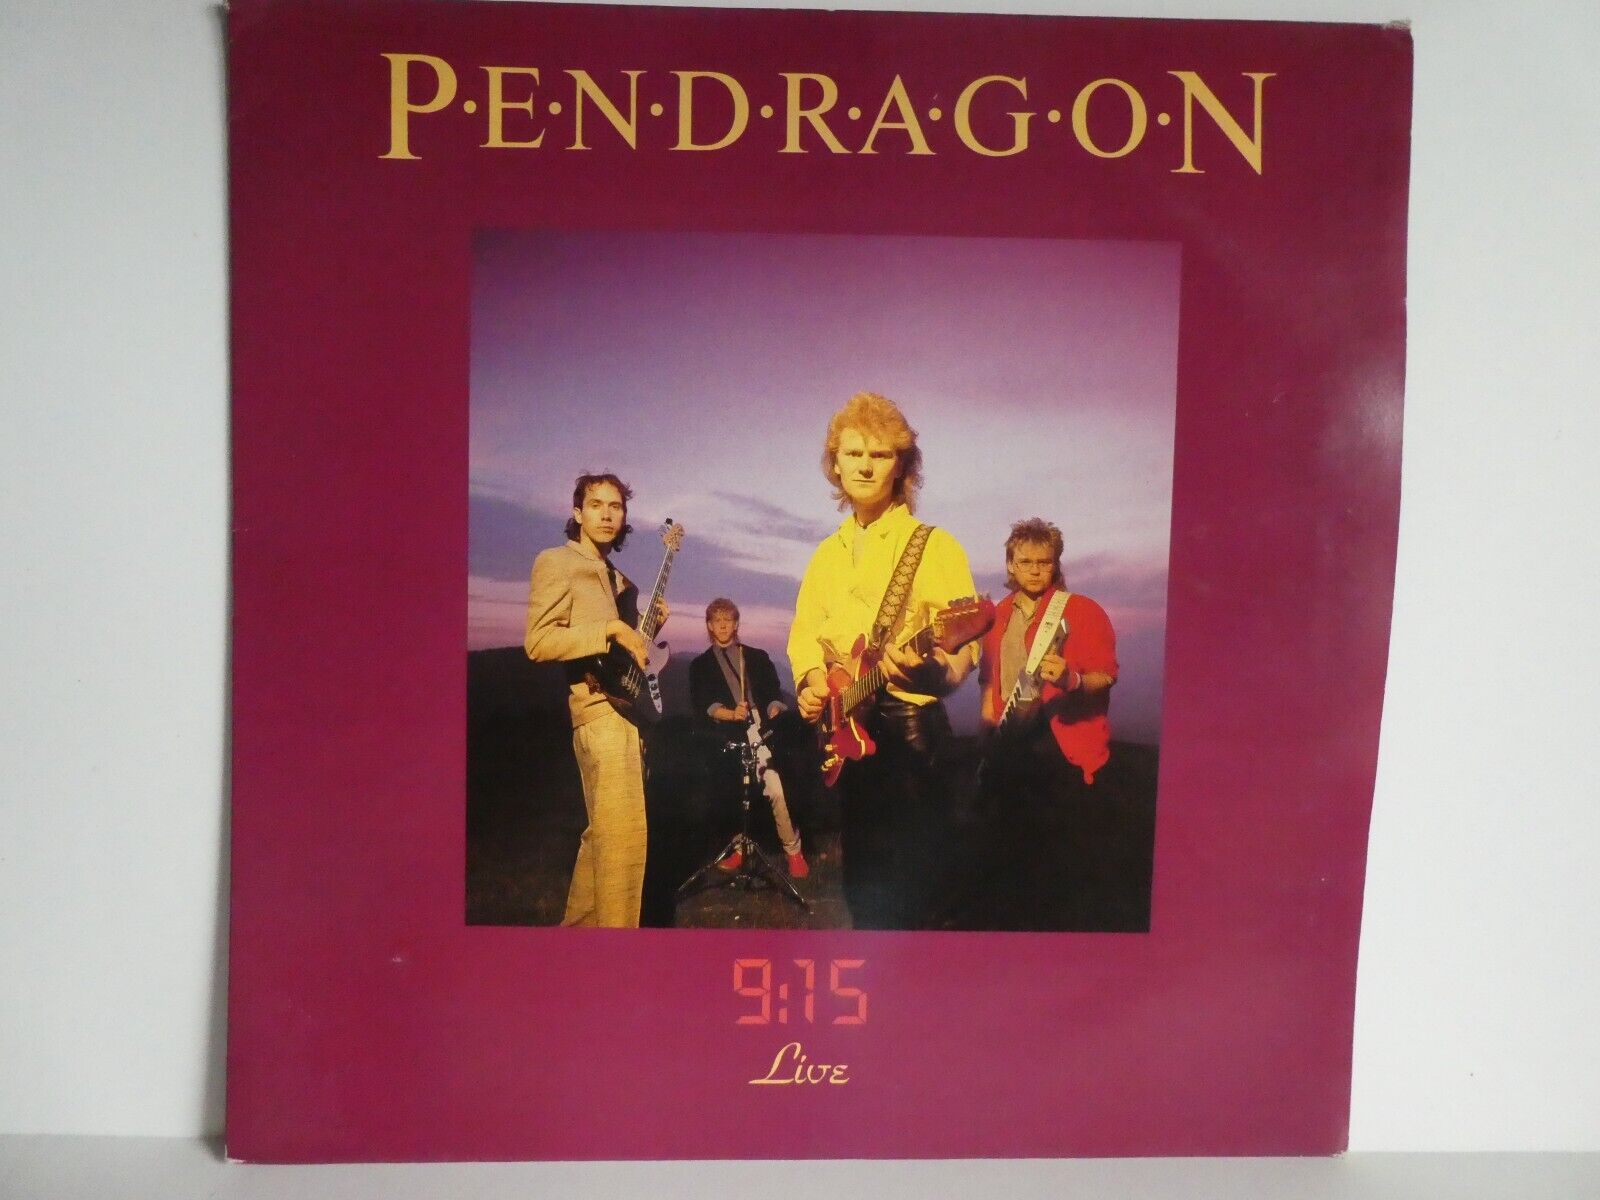 Pendragon – 9:15 Live     Vinyl LP Album UK 1986 Prog Rock AWARENESS REC AWL4042